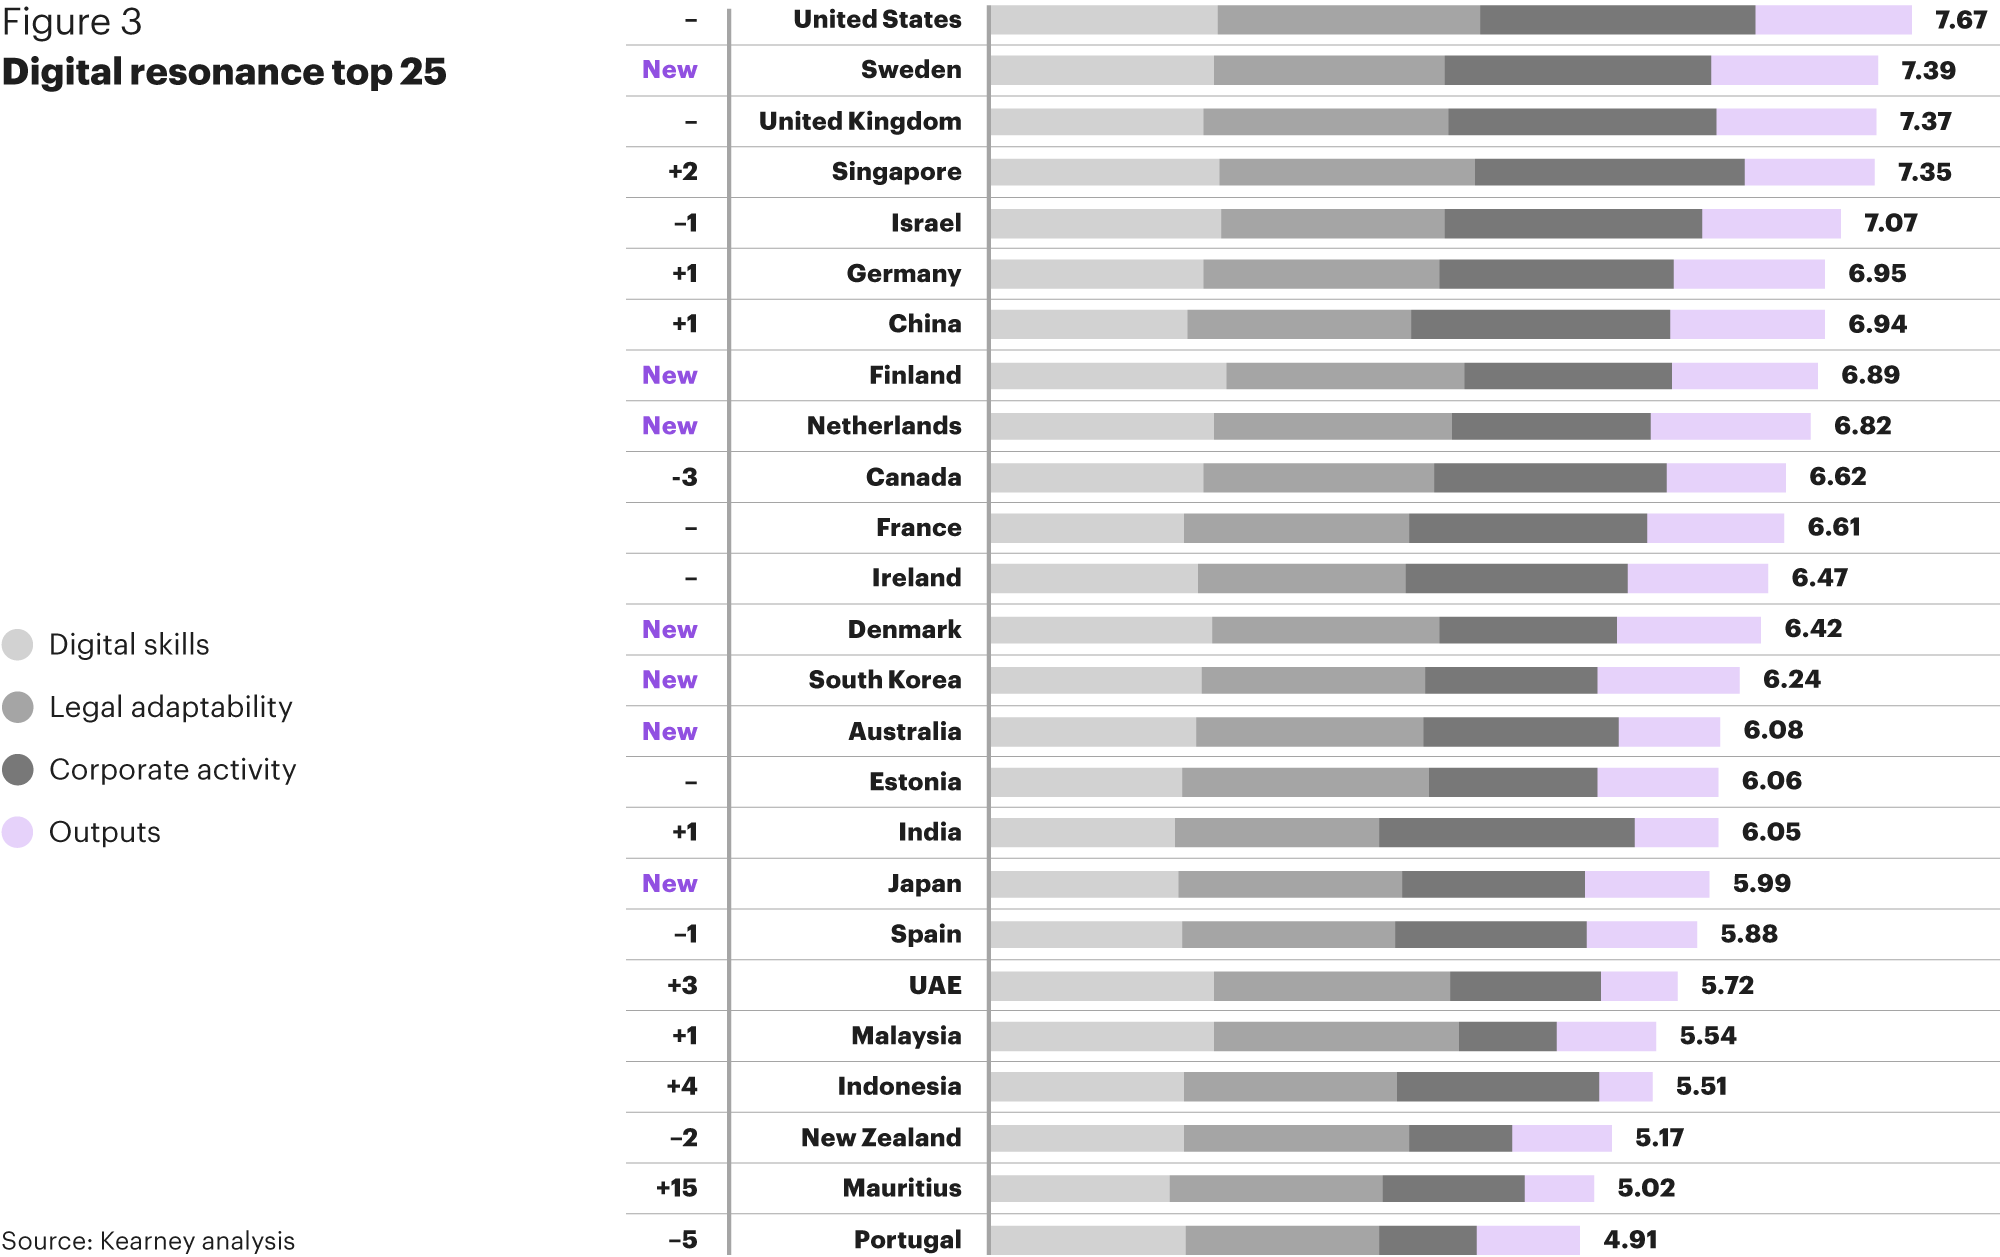 kearney global cities index